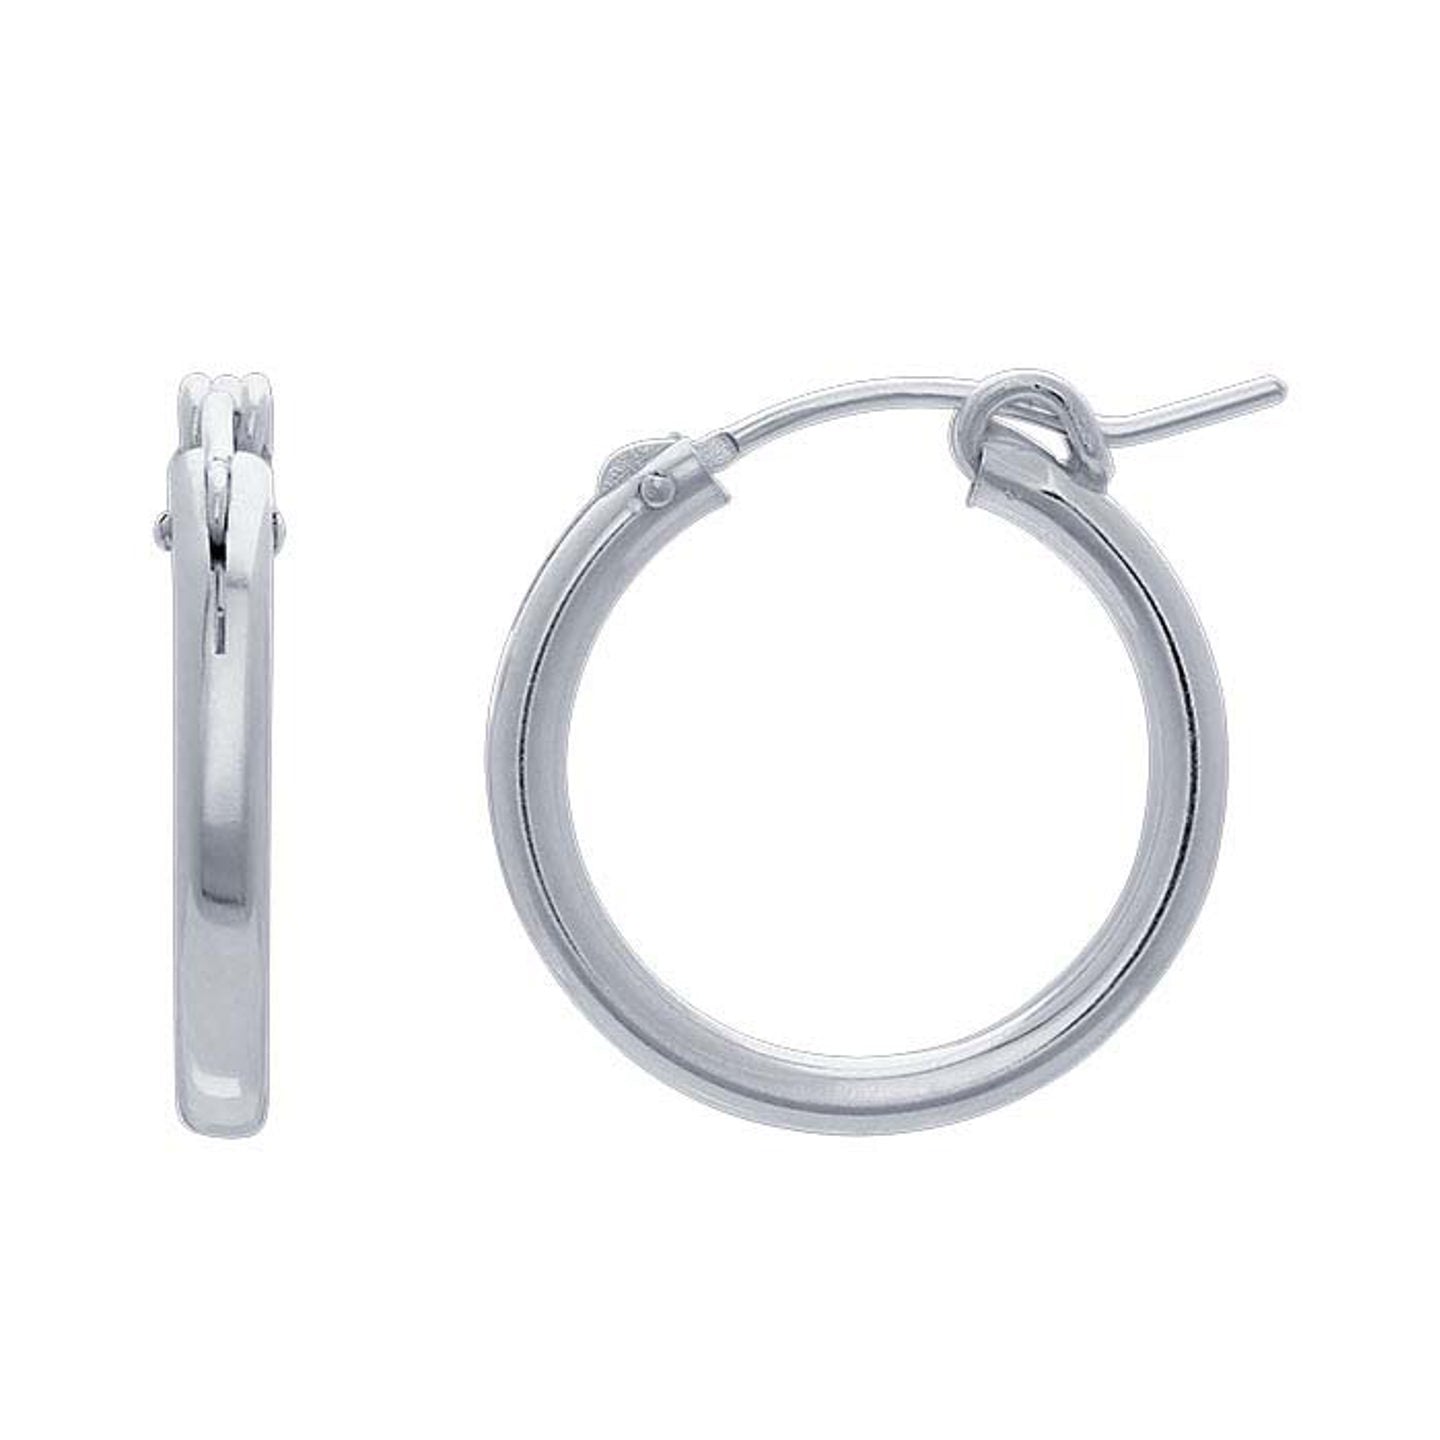 19mm diameter hoop earring with simple latch sterling silver anti-tarnish hypoallergenic 